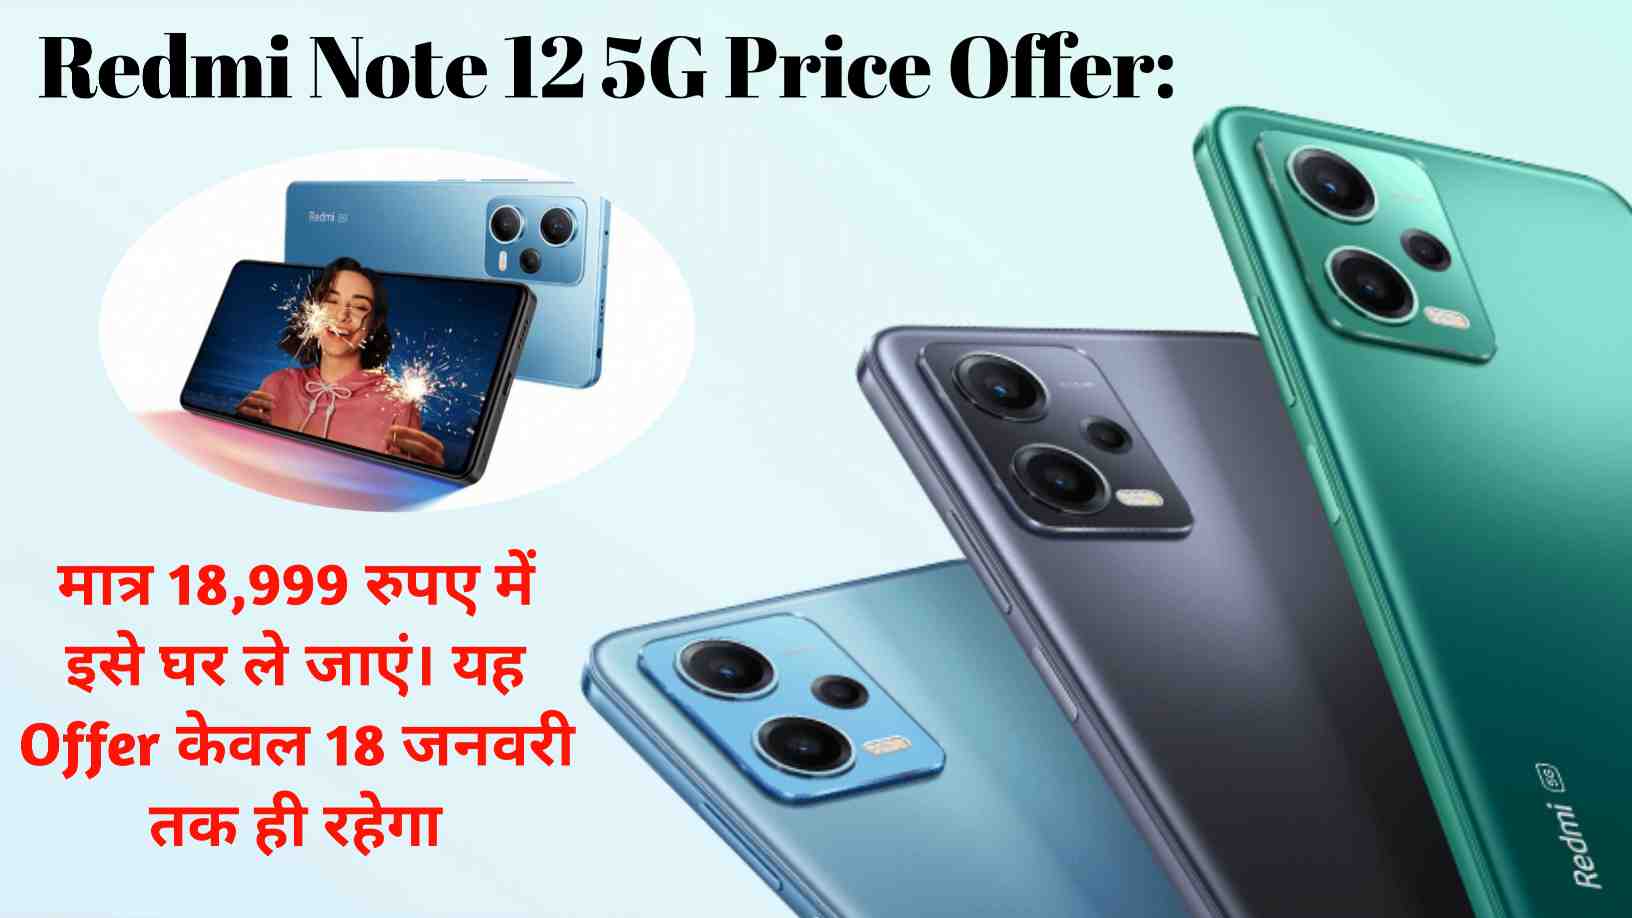 Redmi Note 12 5G Price Offer